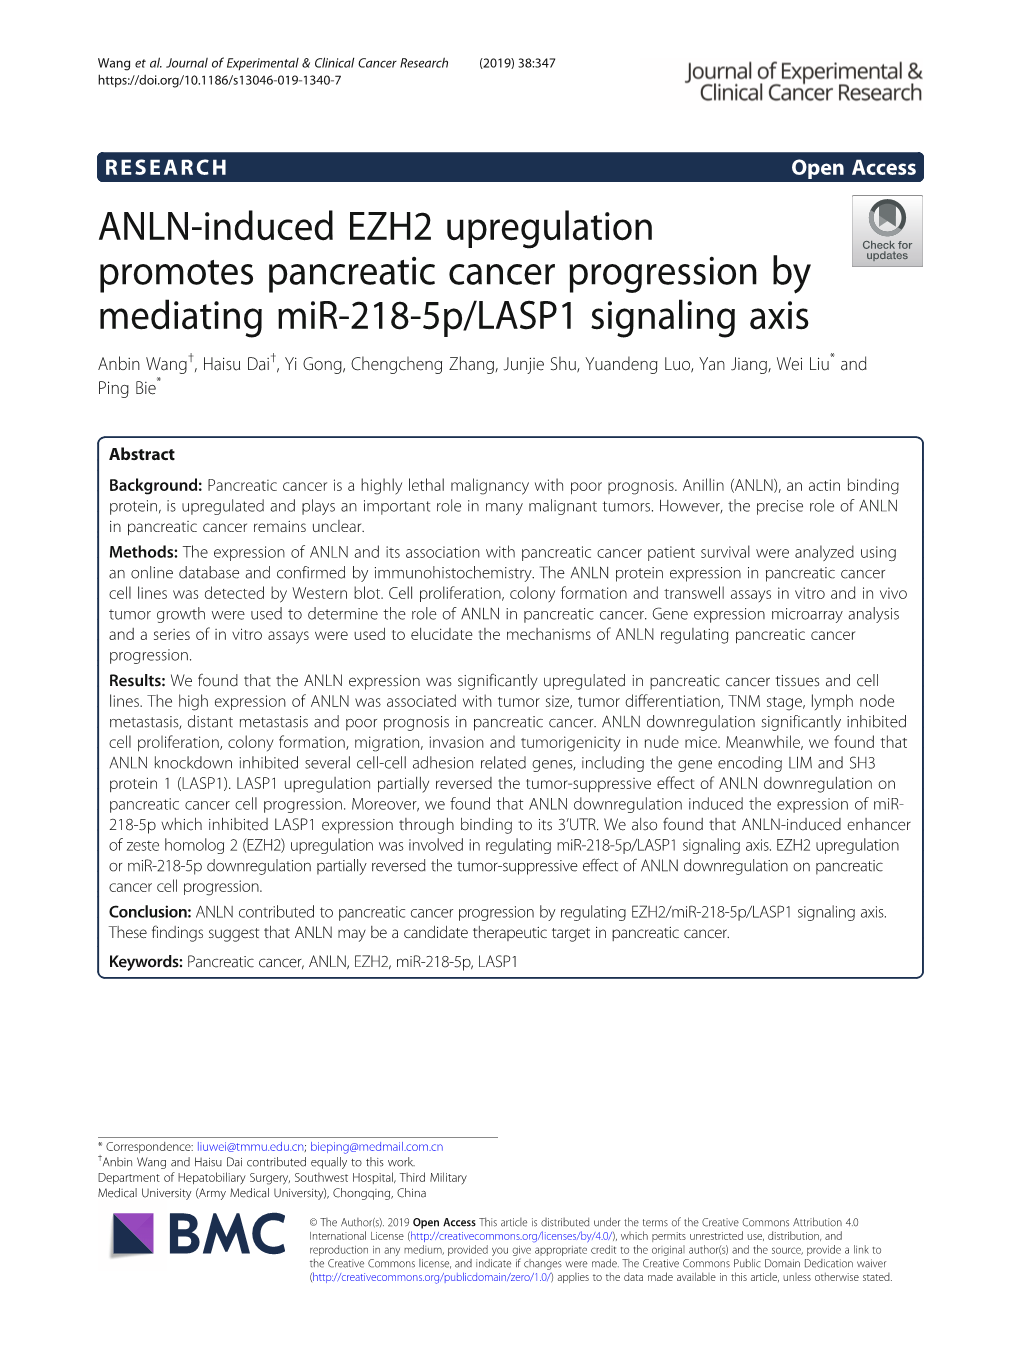 ANLN-Induced EZH2 Upregulation Promotes Pancreatic Cancer